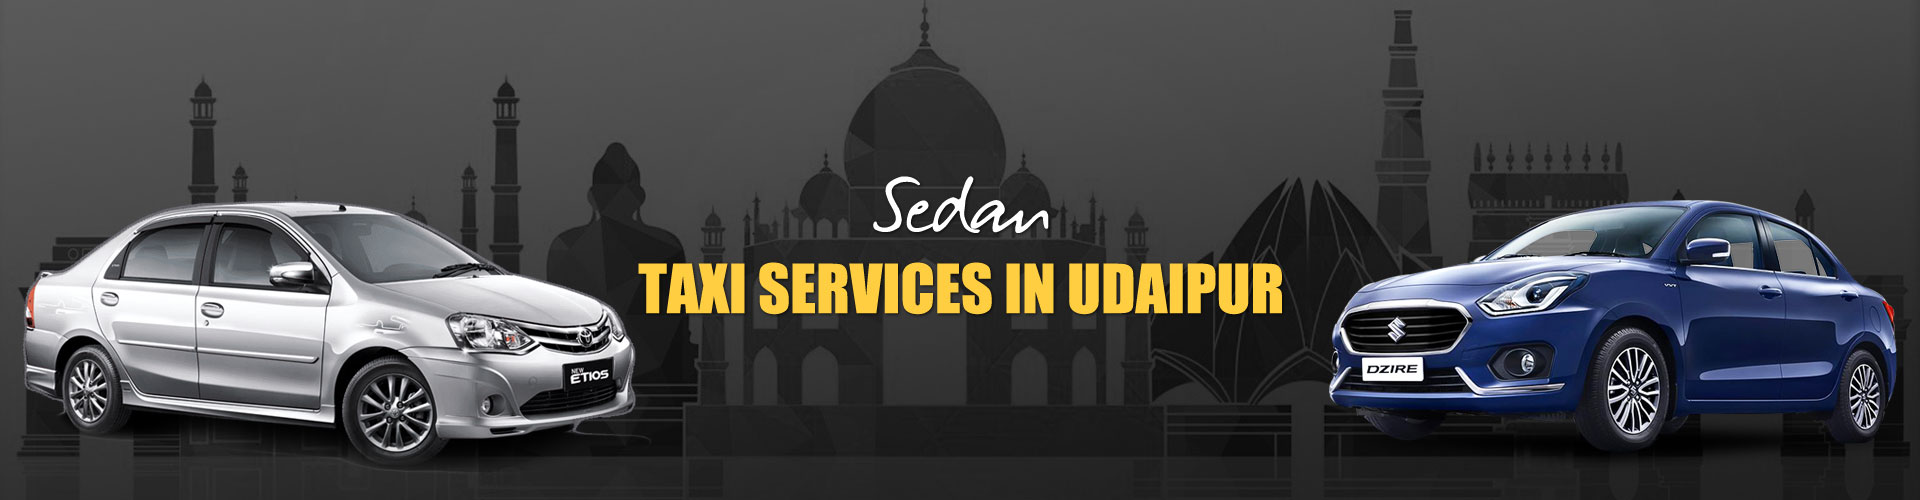 Sedan Taxi Service in Udaipur - Mateshwari Tours